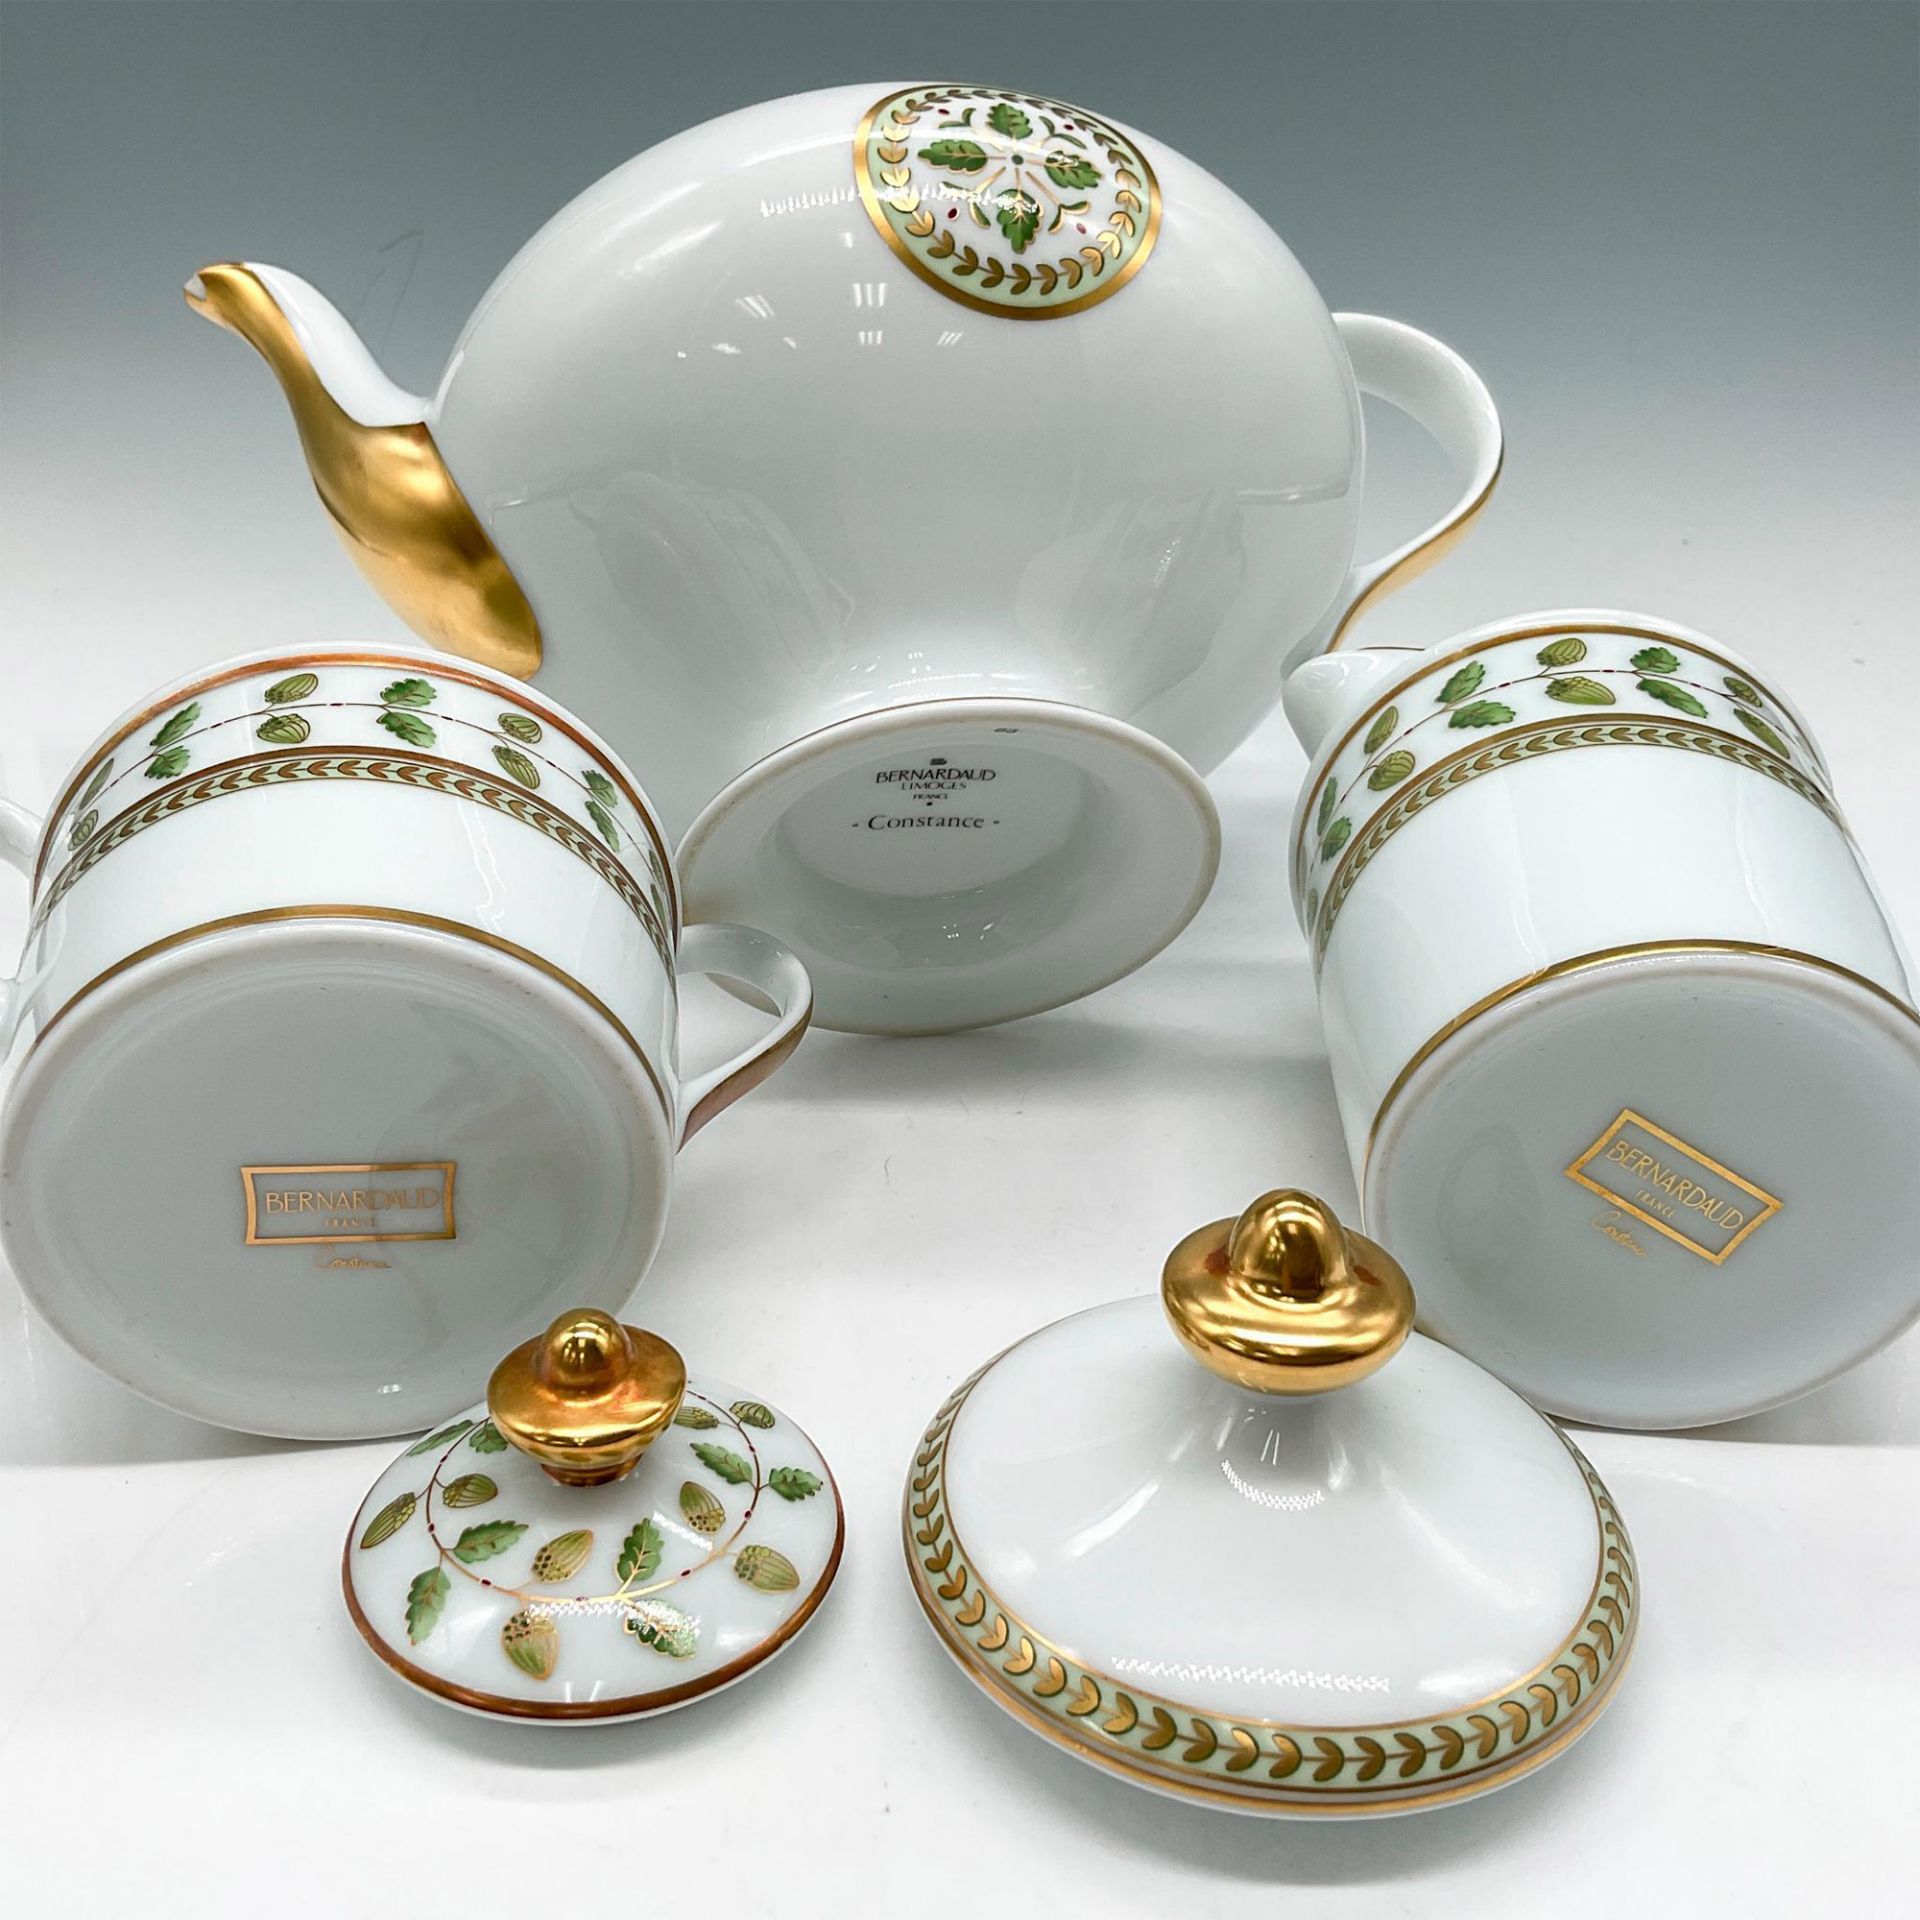 3pc Bernardaud Limoges Porcelain Tea Service, Constance - Image 5 of 7